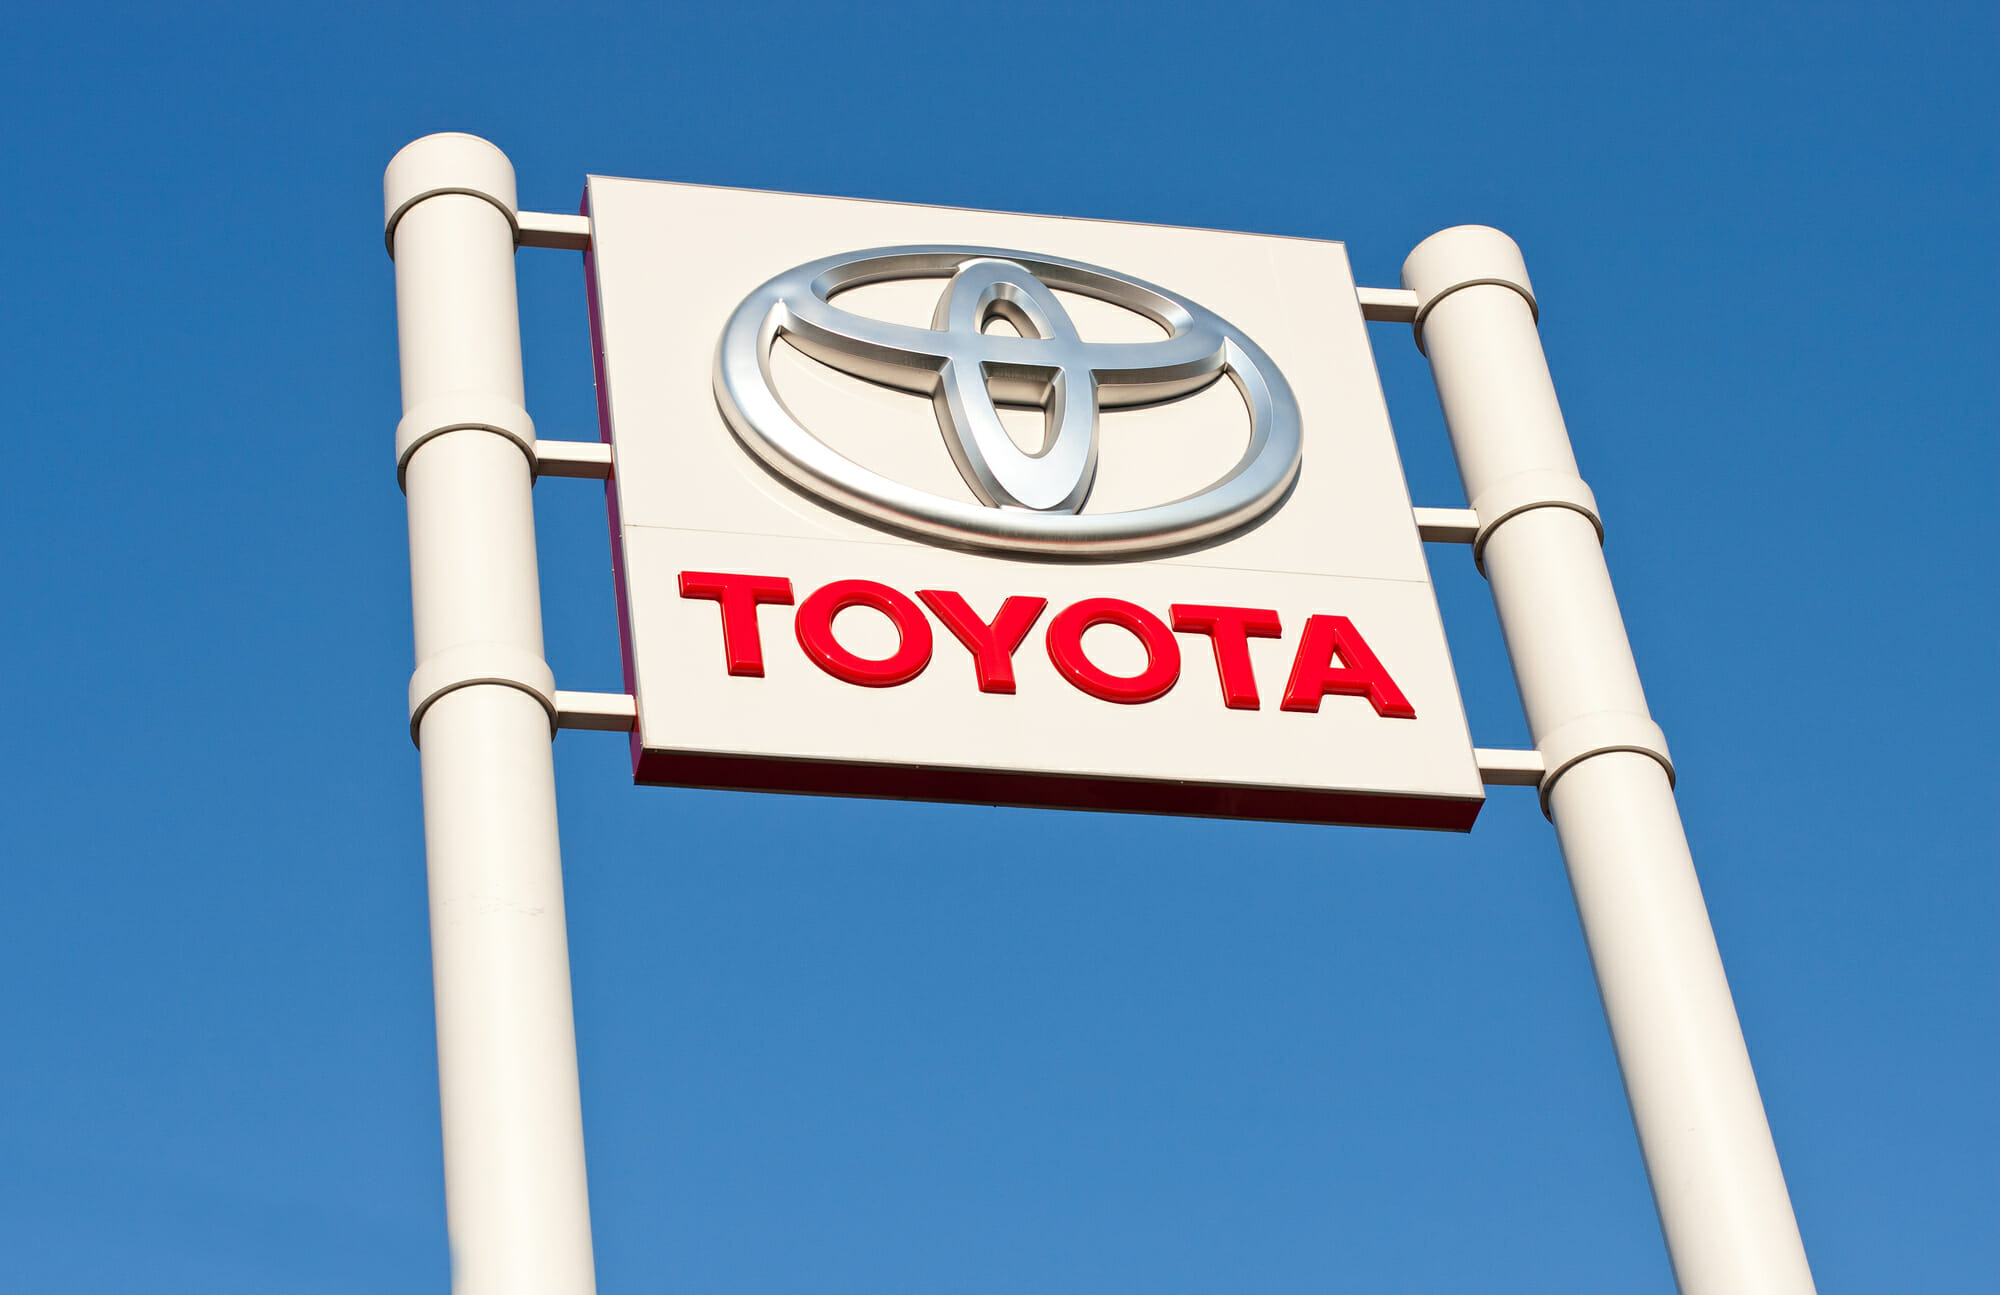 Toyota logo/branding